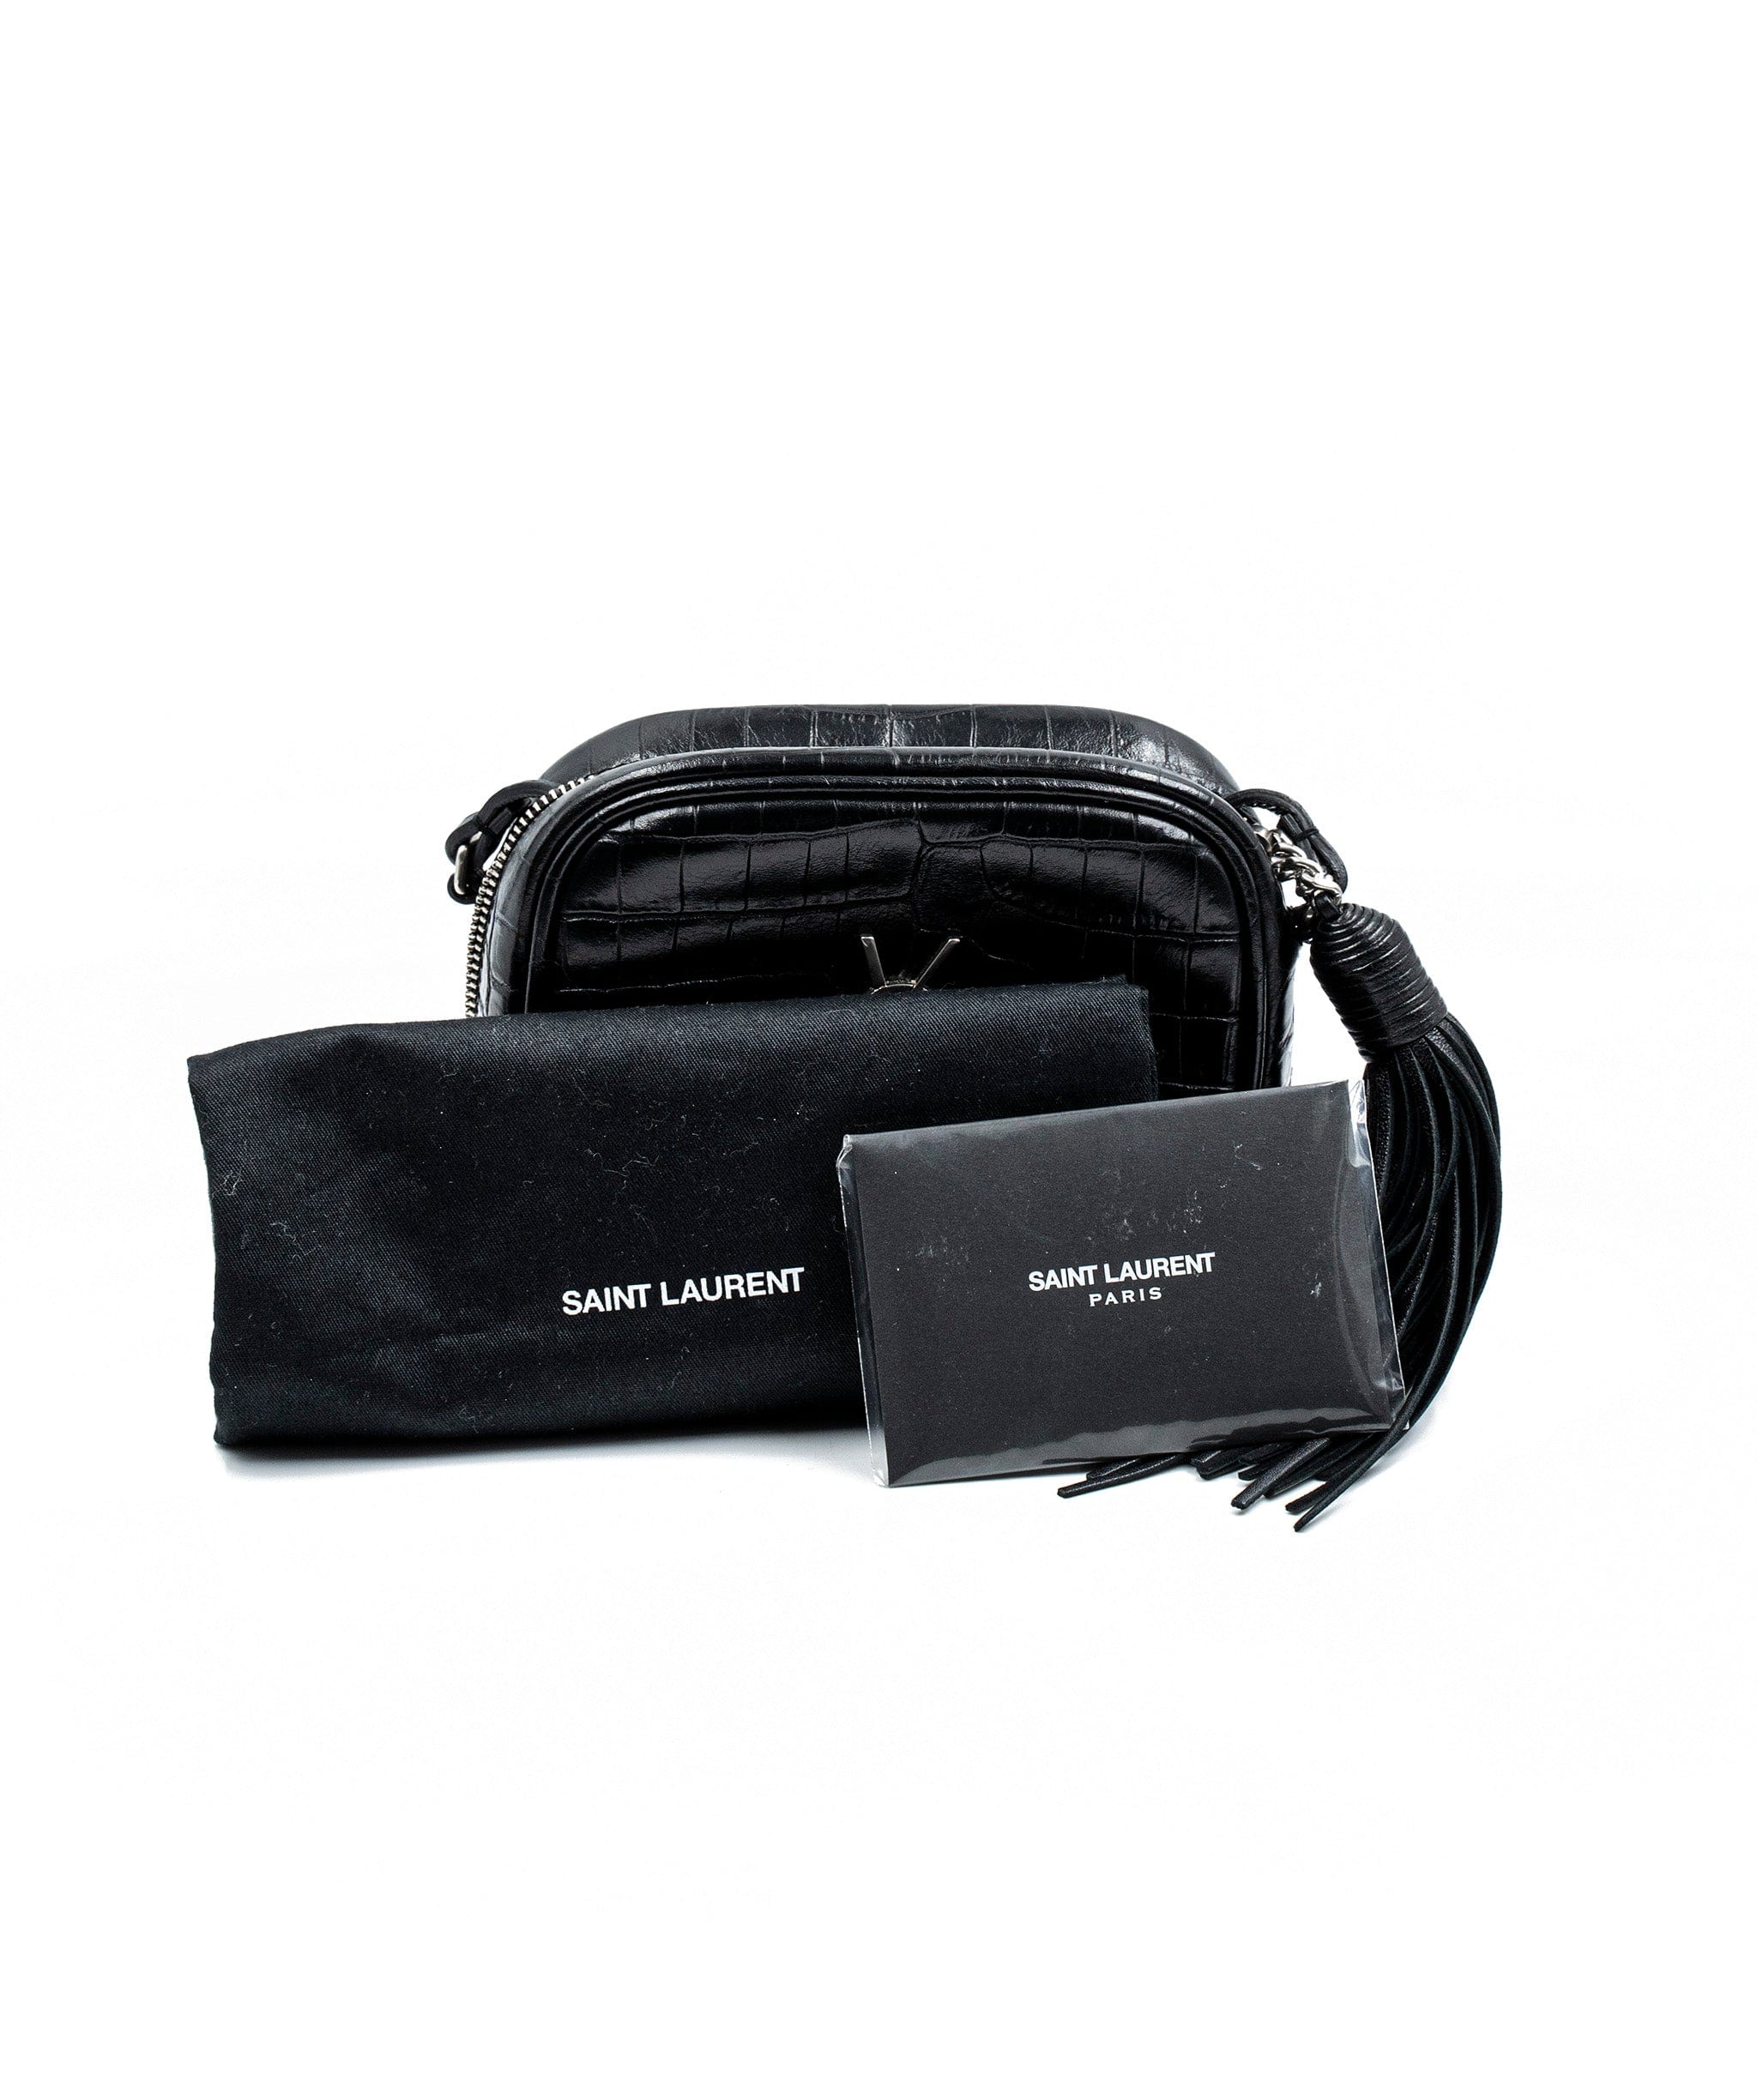 Yves Saint Laurent Saint laurent black mini crossbody with SHW ALC0151